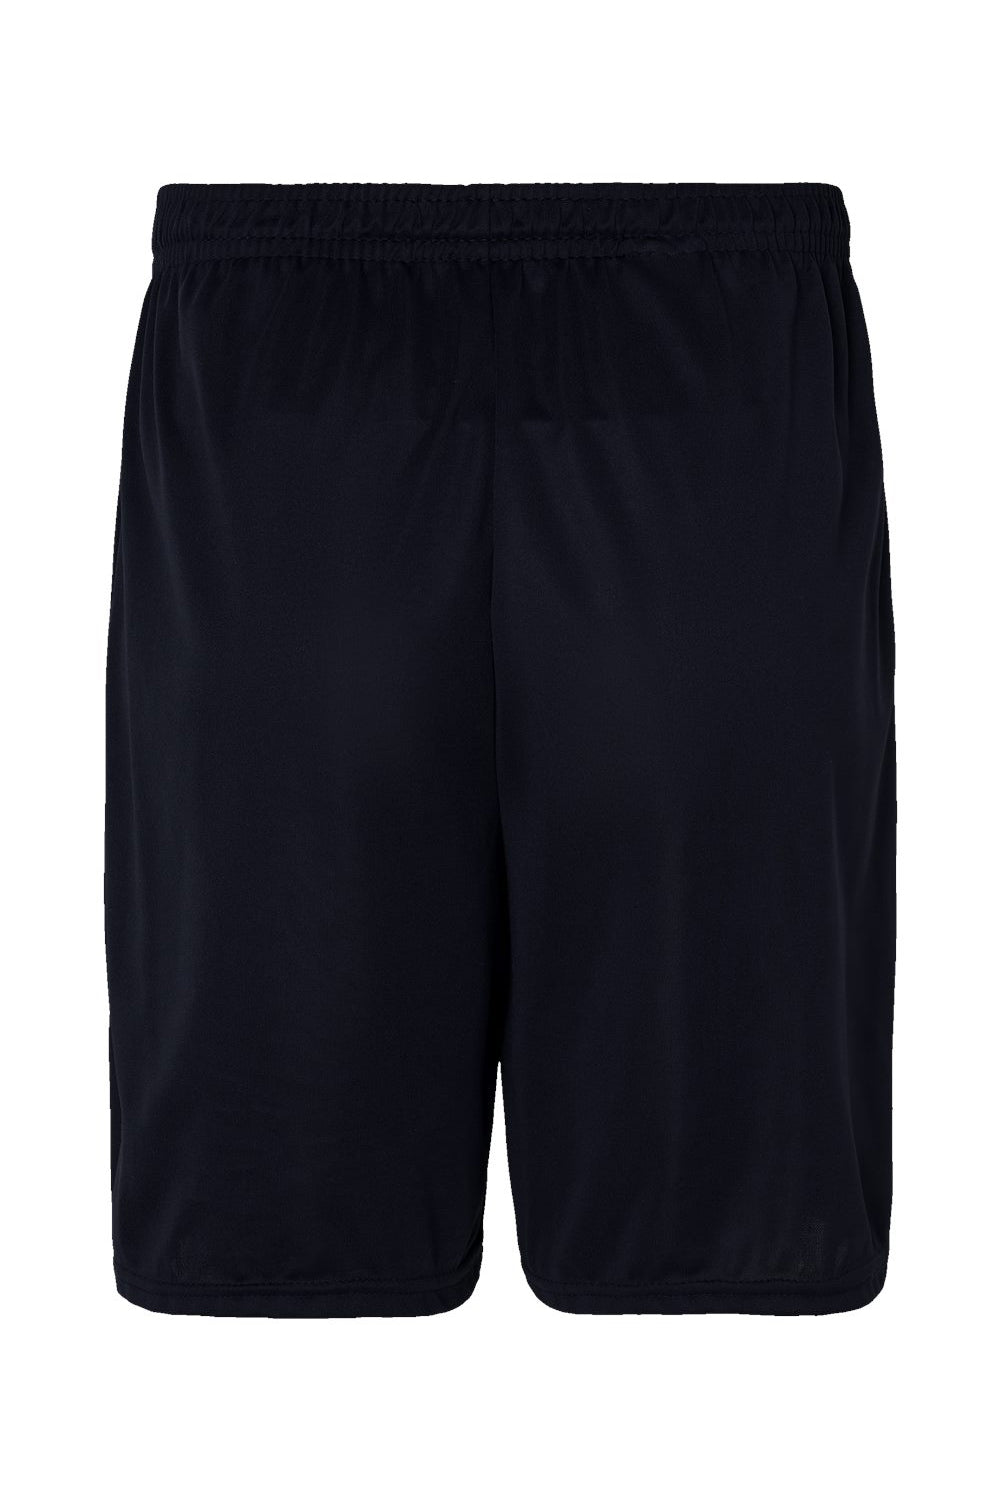 Augusta Sportswear 1425 Mens Octane Moisture Wicking Shorts Black Flat Back